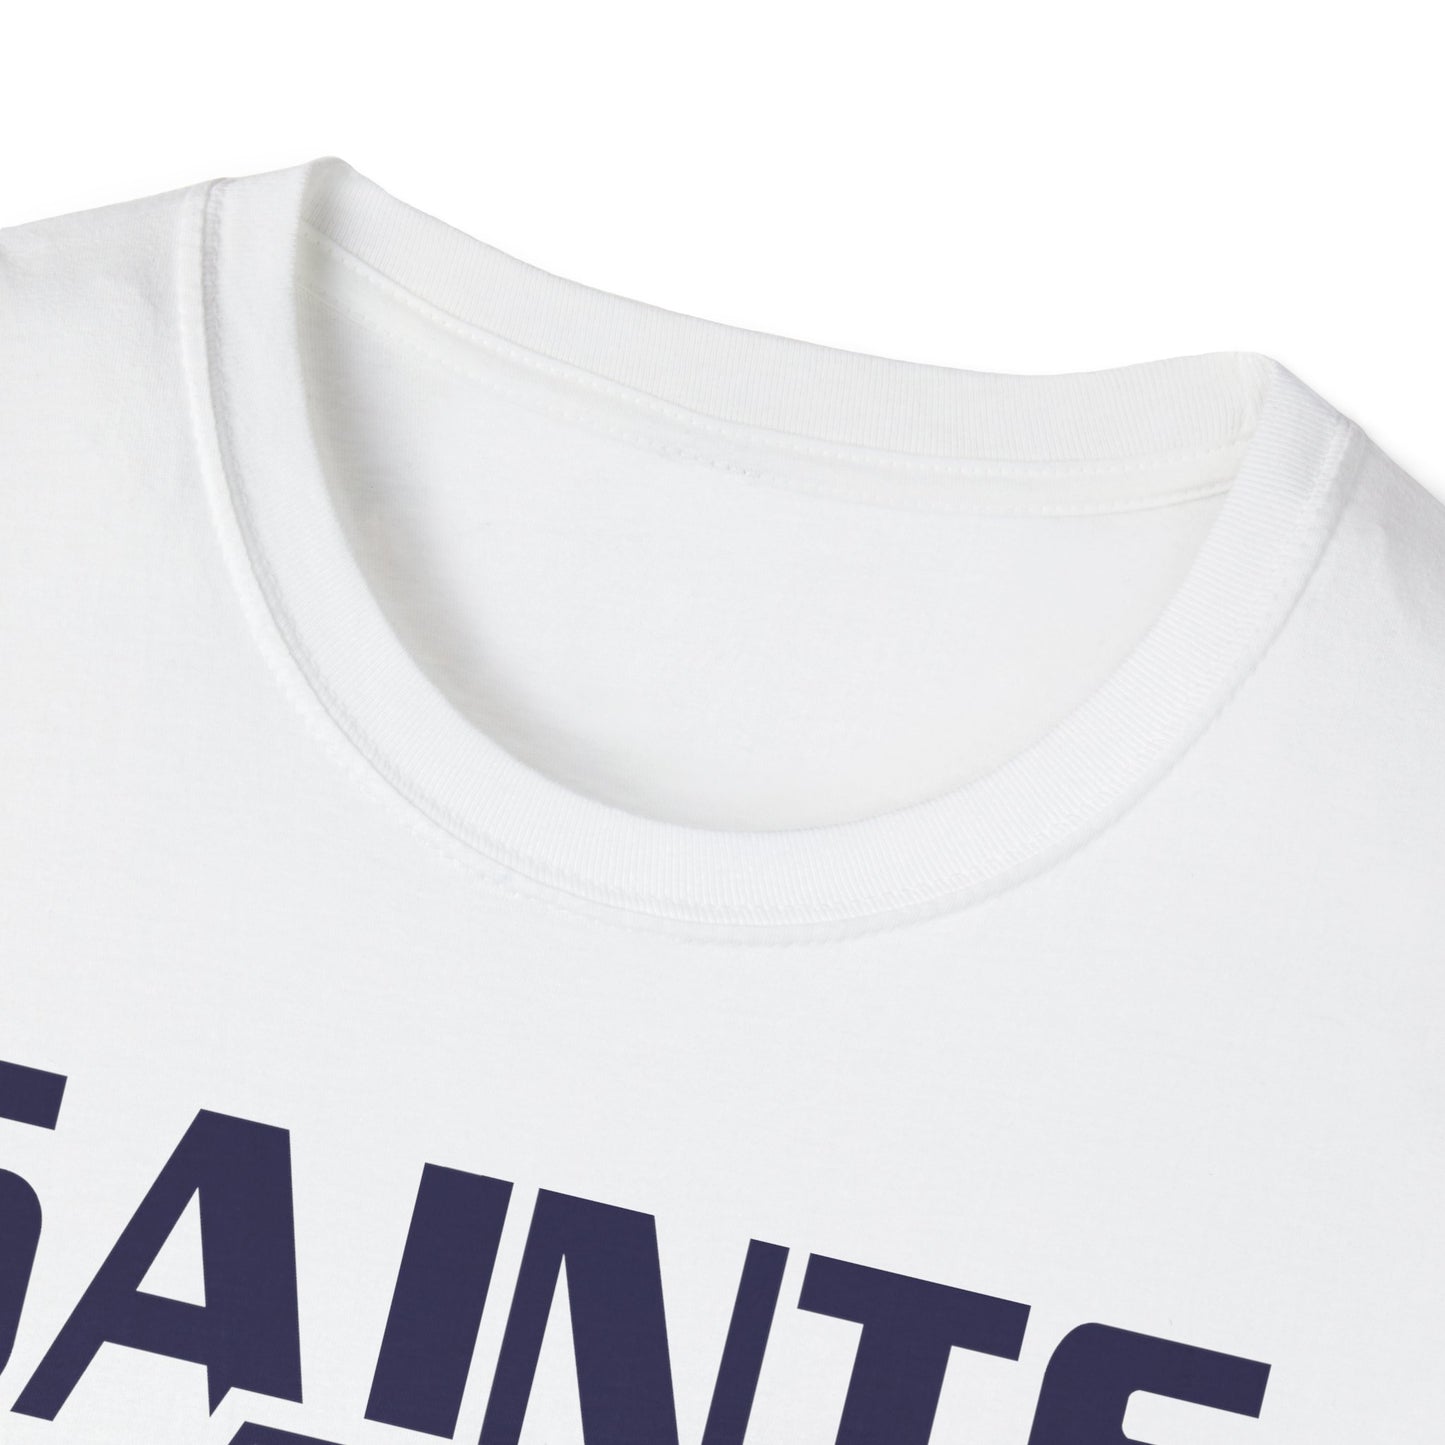 Saints Repeat Unisex Softstyle T-Shirt